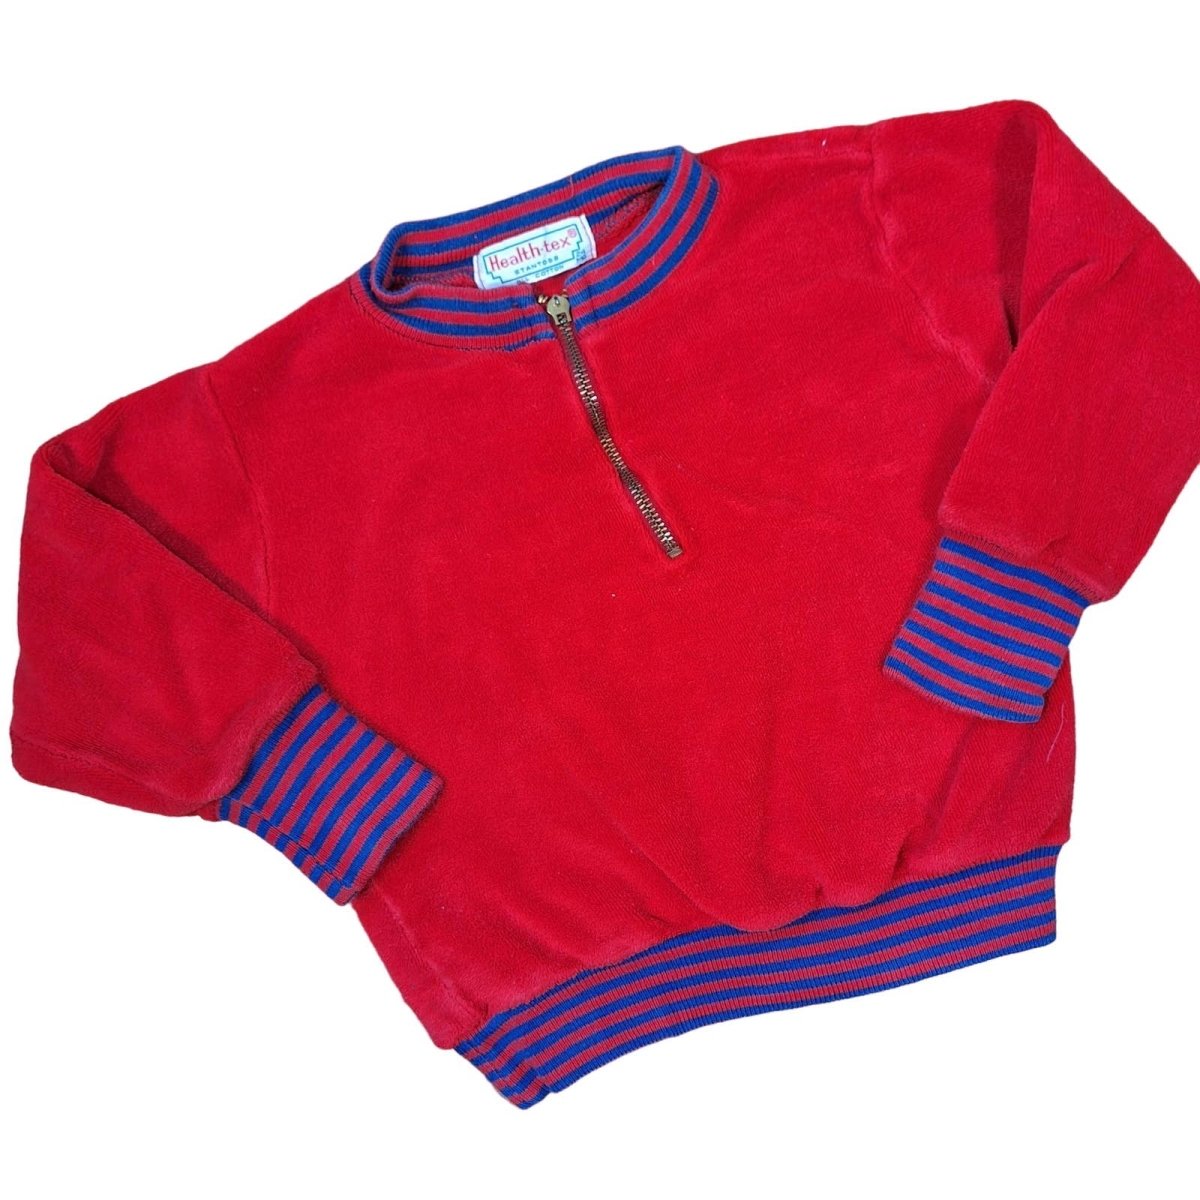 Vintage 70s/80s Kids Velour 1/4 Zip Sweatshirt Unisex Toddler 24mo - themallvintage The Mall Vintage